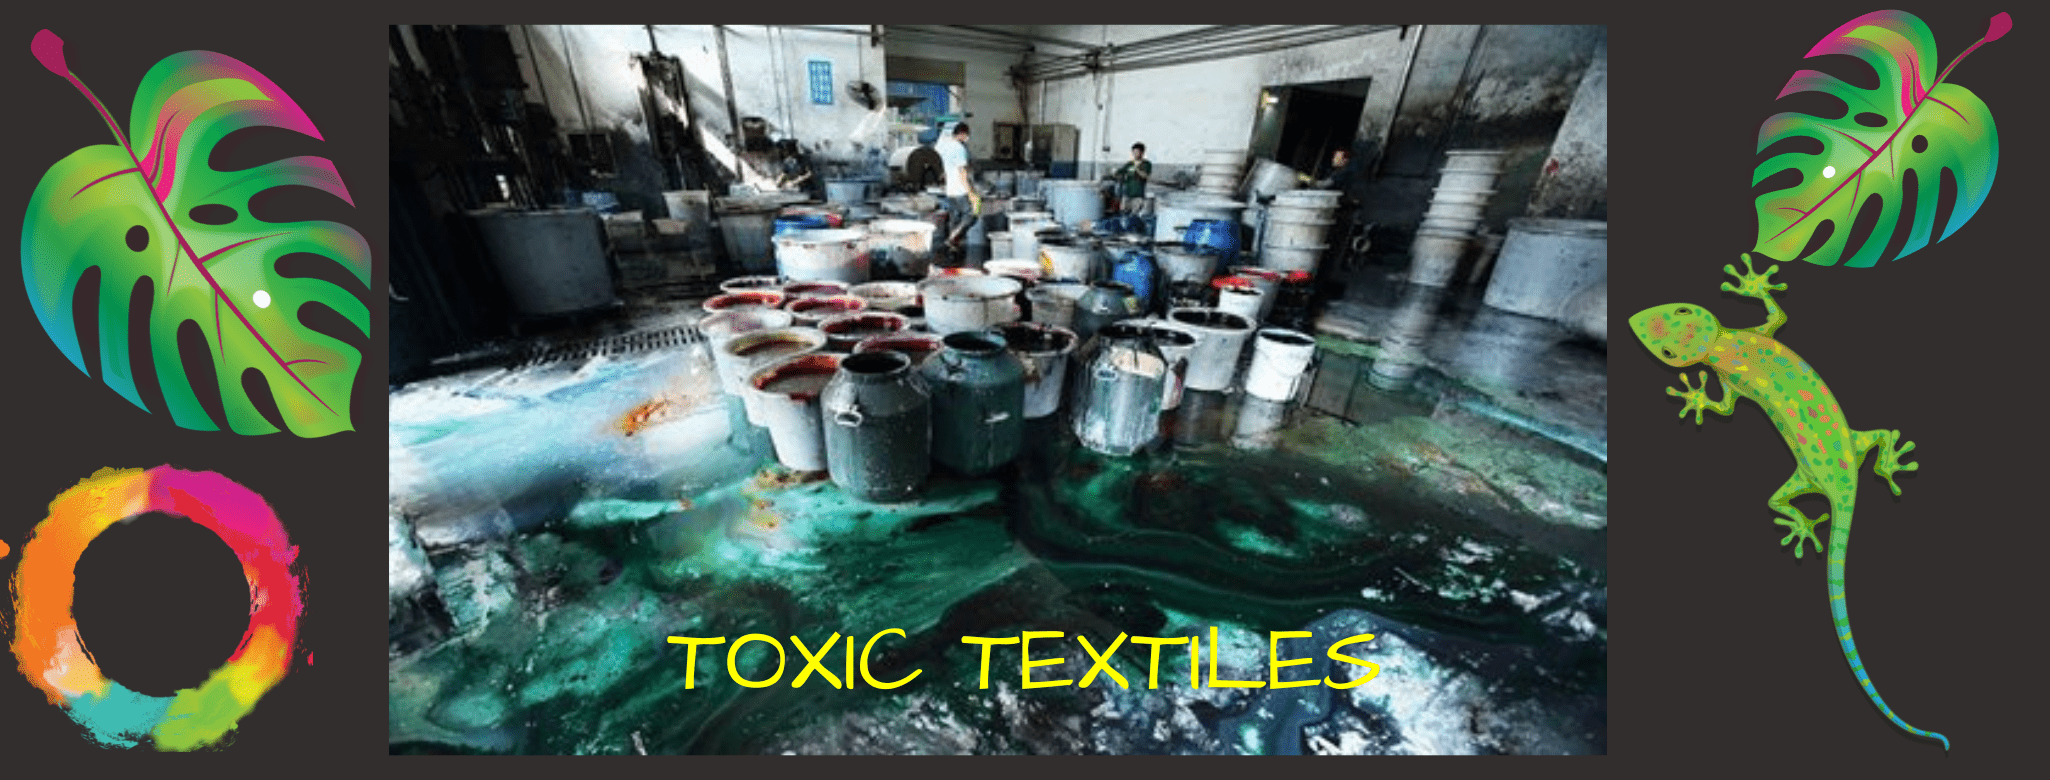 toxic chemicals textiles on ecomauritius.mu